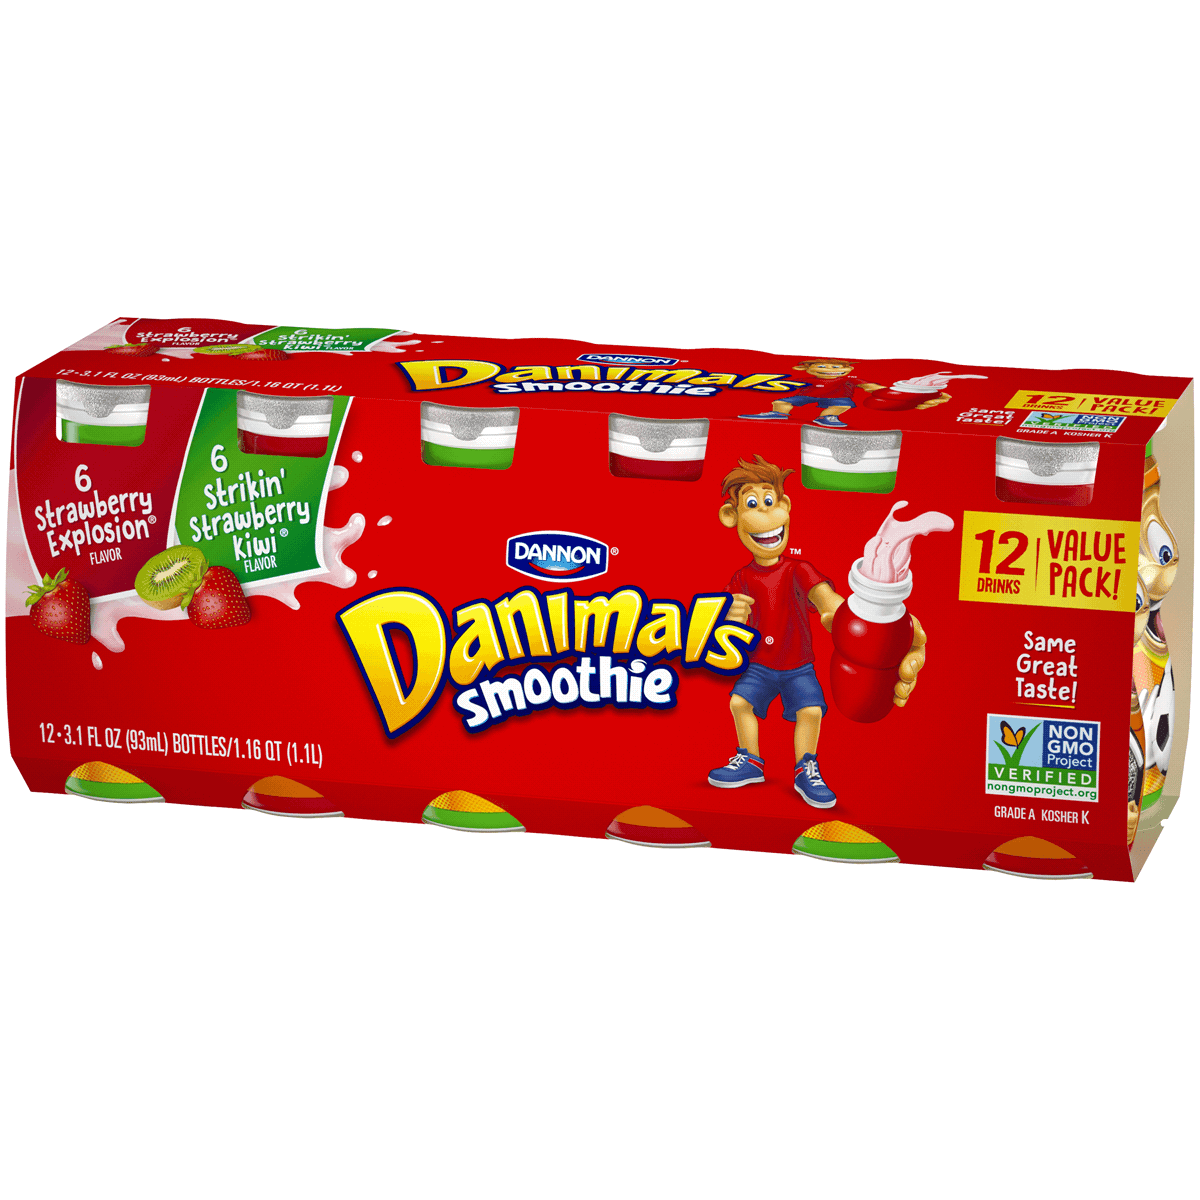 Dannon - Danimals Strawberry Explosion and Strikin' Strawberry Kiwi Kids' Yogurt 12 Bottles, 3.1oz